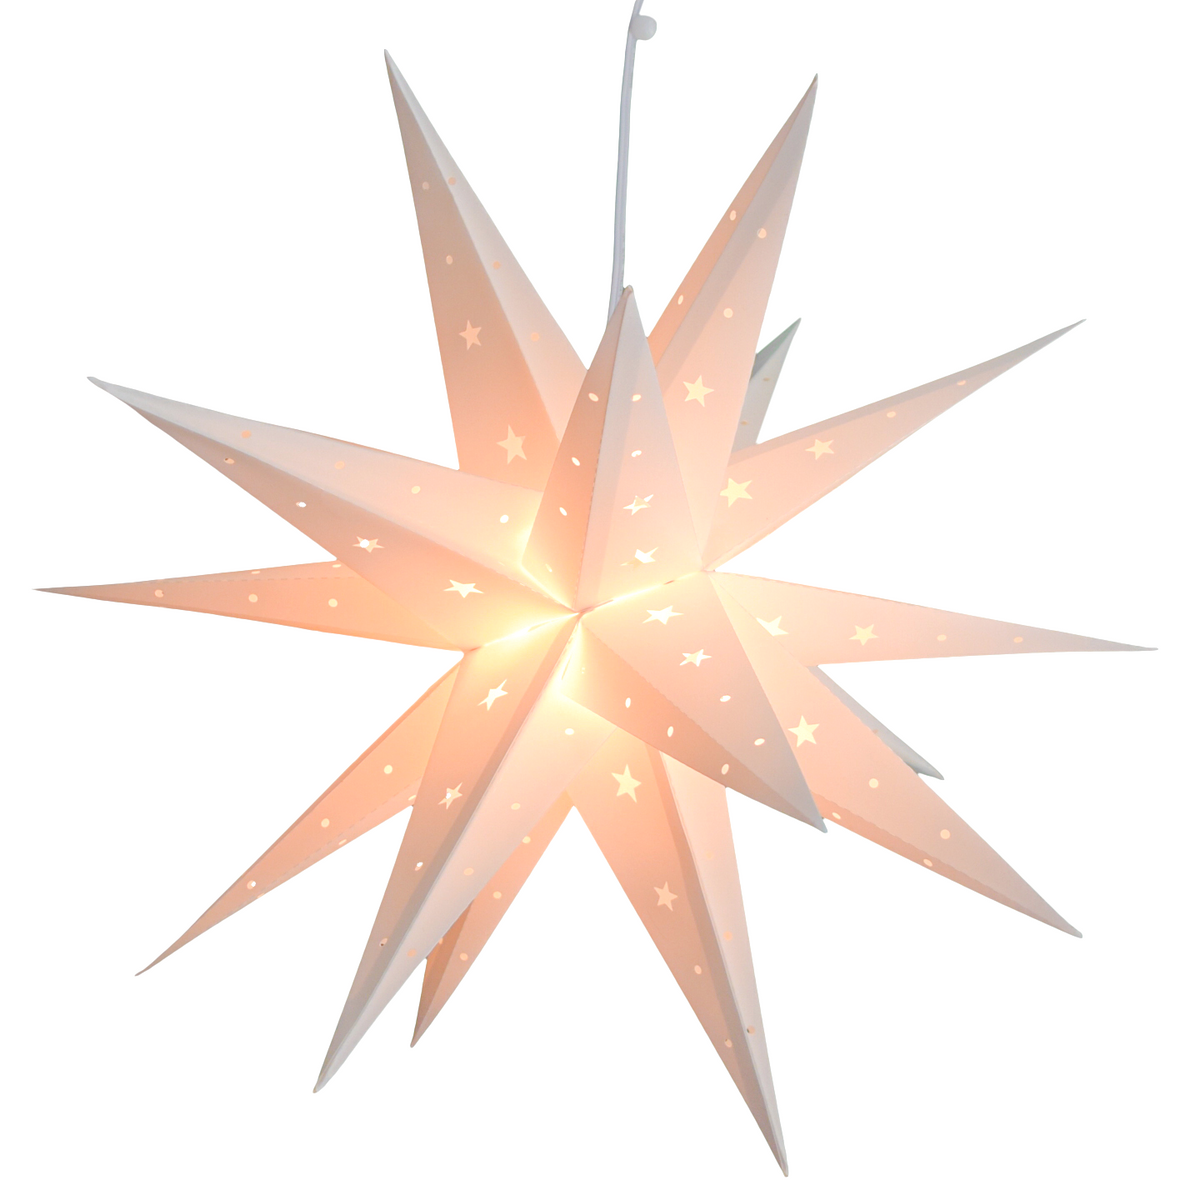 20&quot; White Moravian Weatherproof Star Lantern Lamp, Multi-Point Hanging Decoration